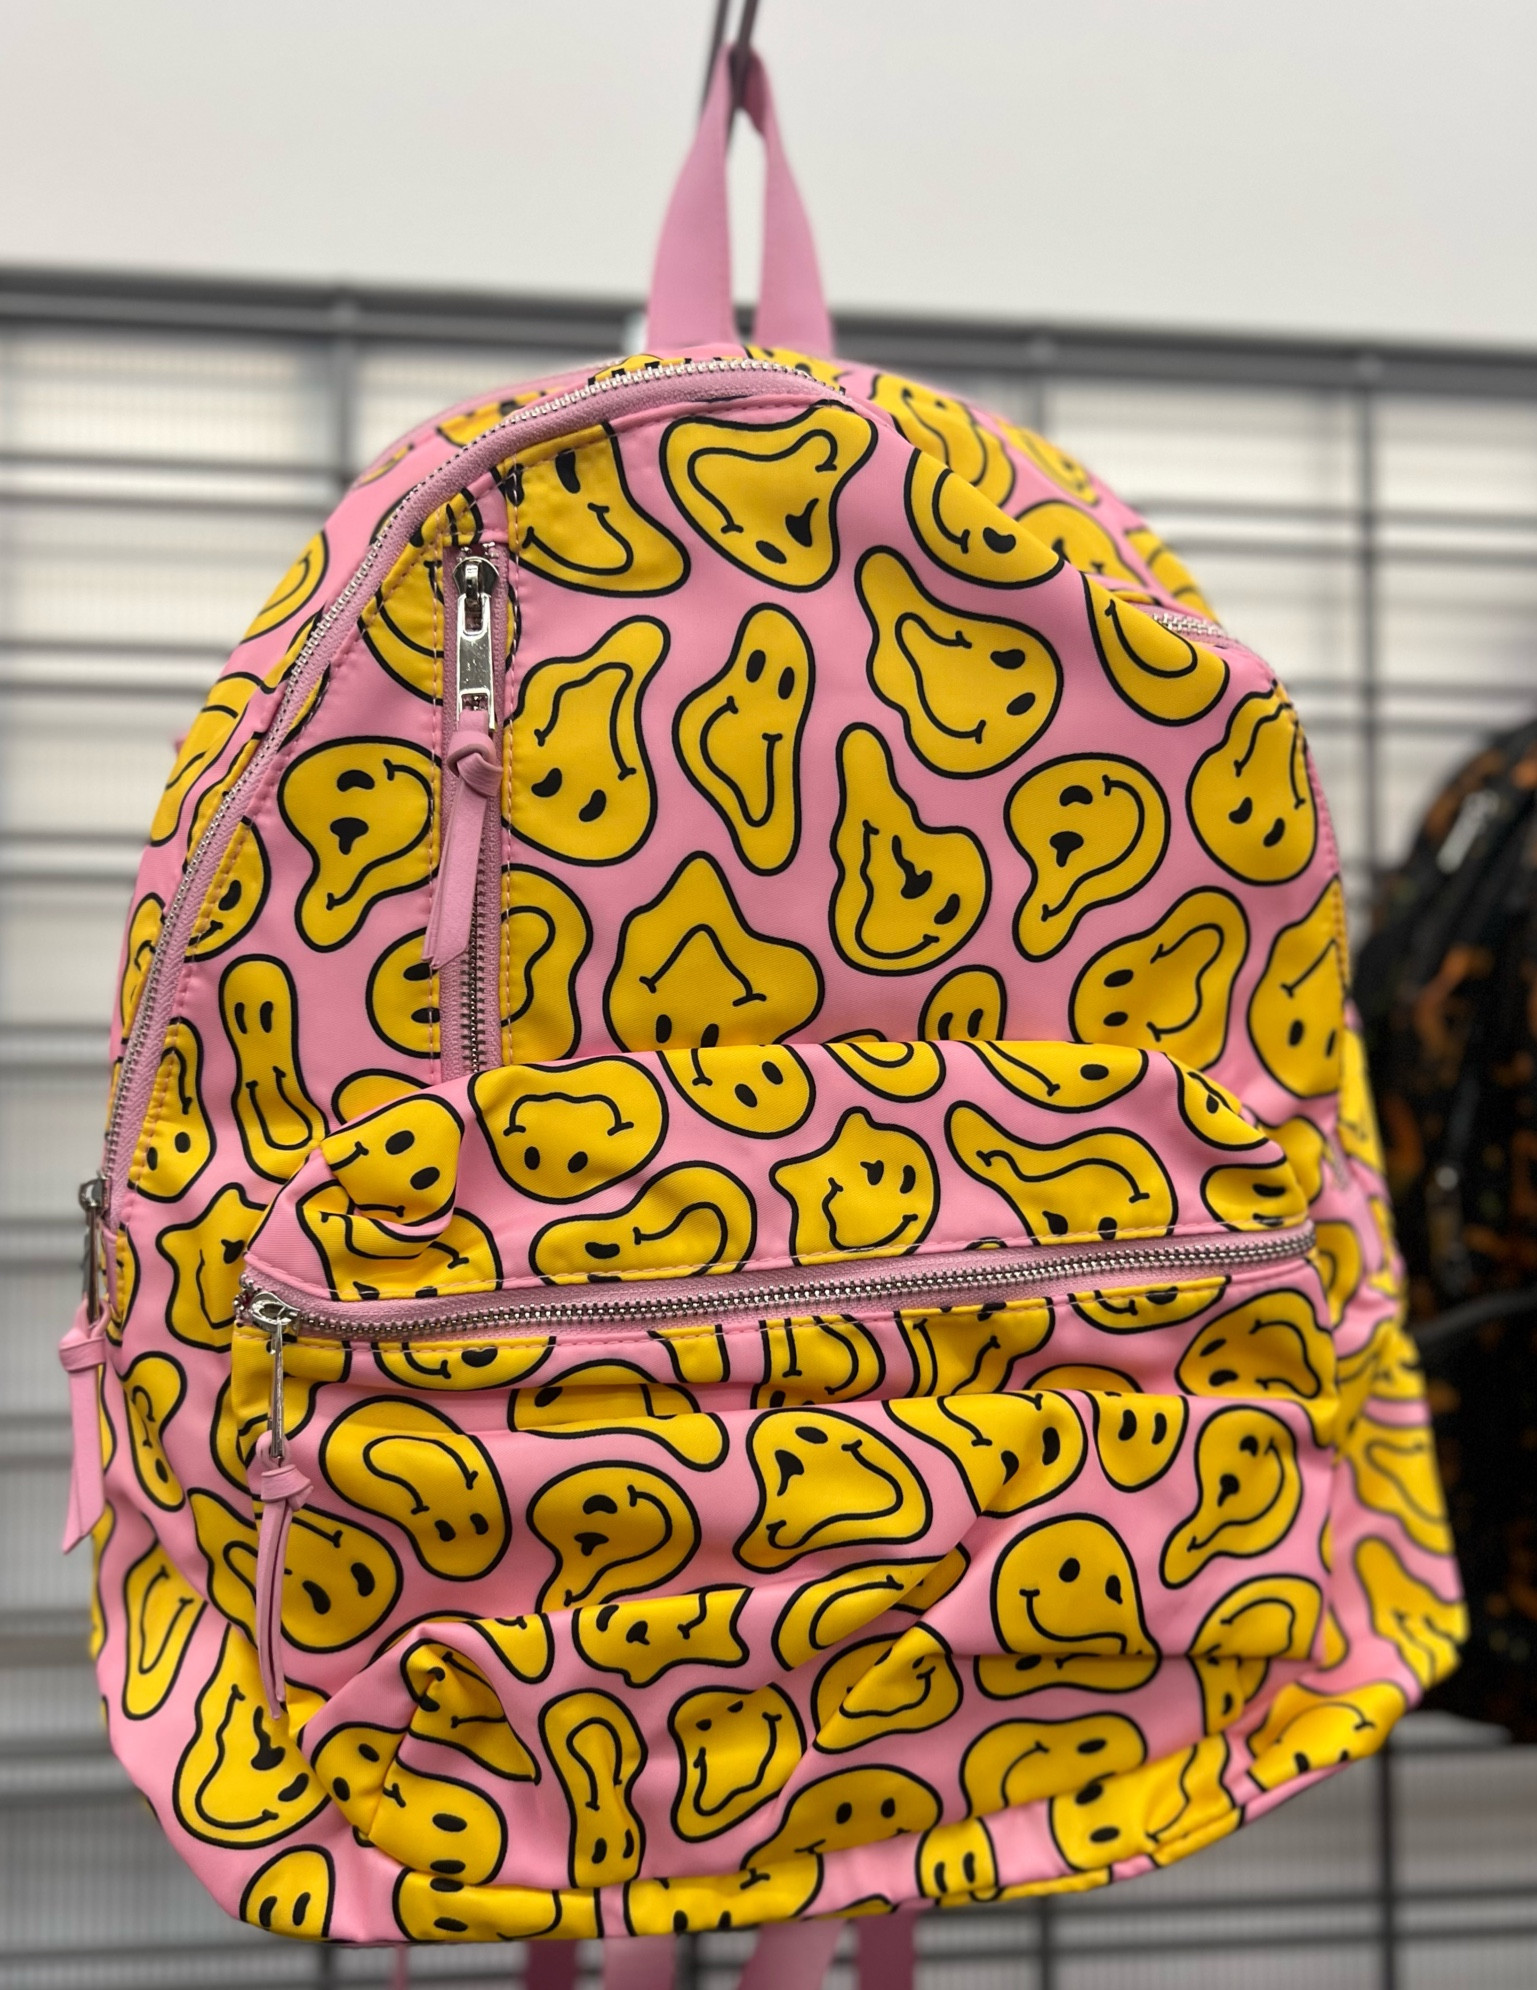 No Boundaries Women's Dome Zip Backpack, Pink Drip Smiley Print